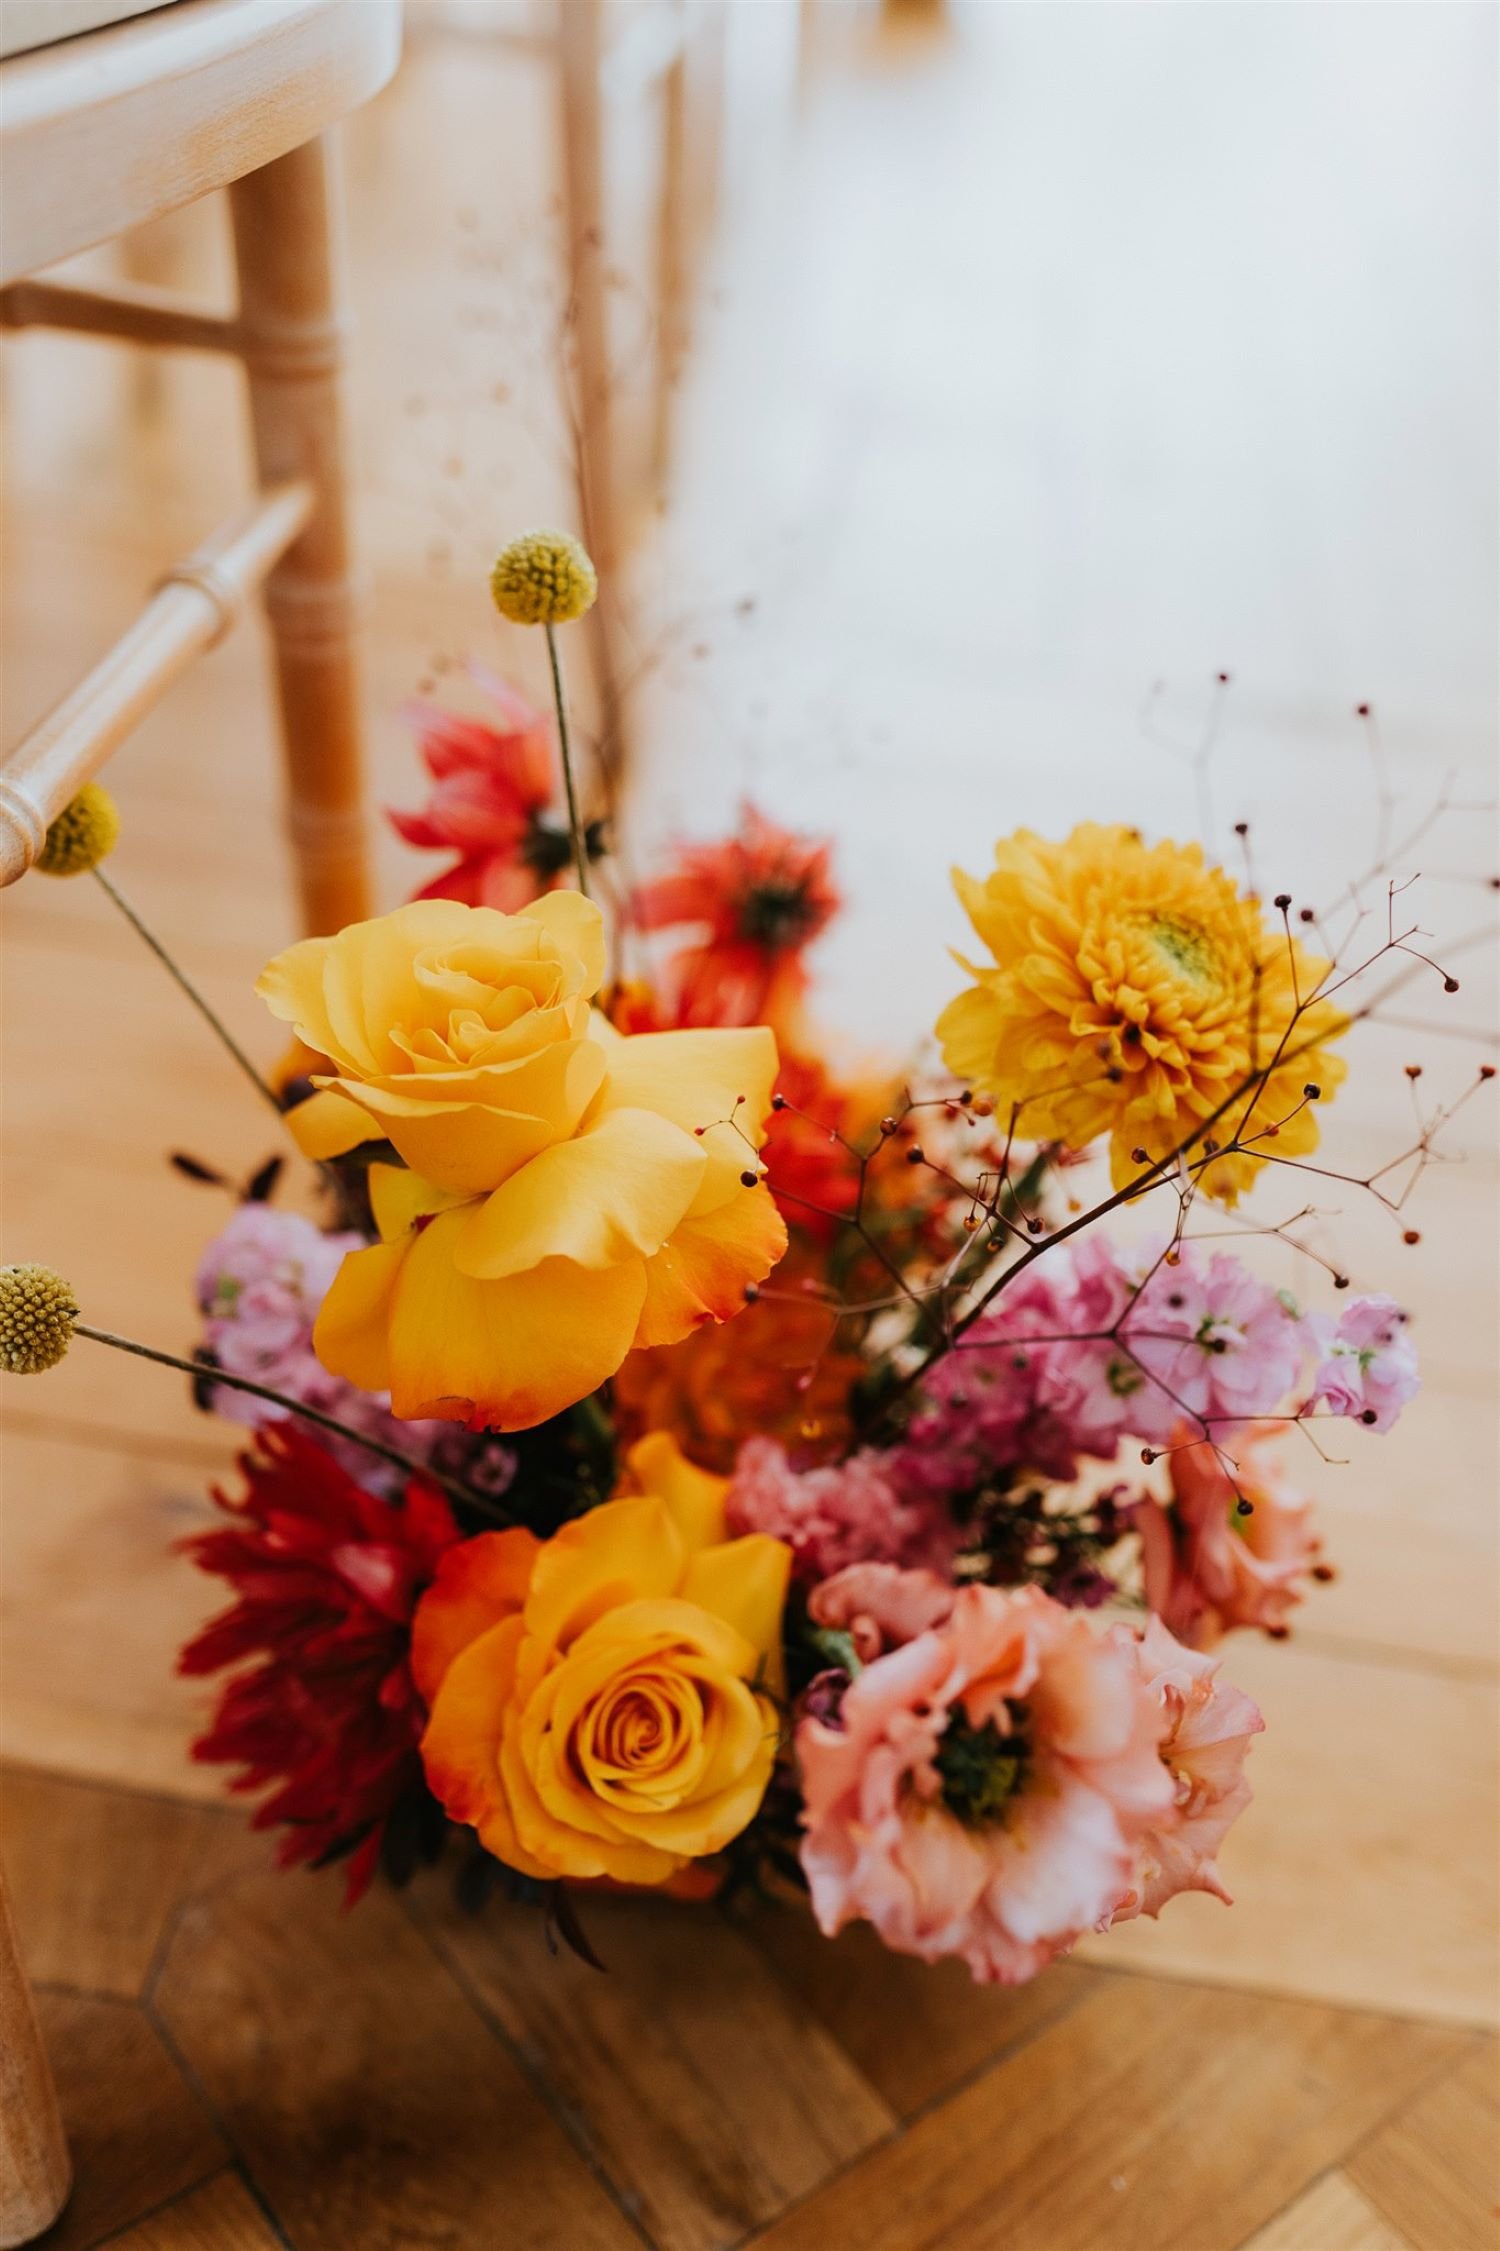 pelham house sussex florist wedding aisle flower bowl.jpg